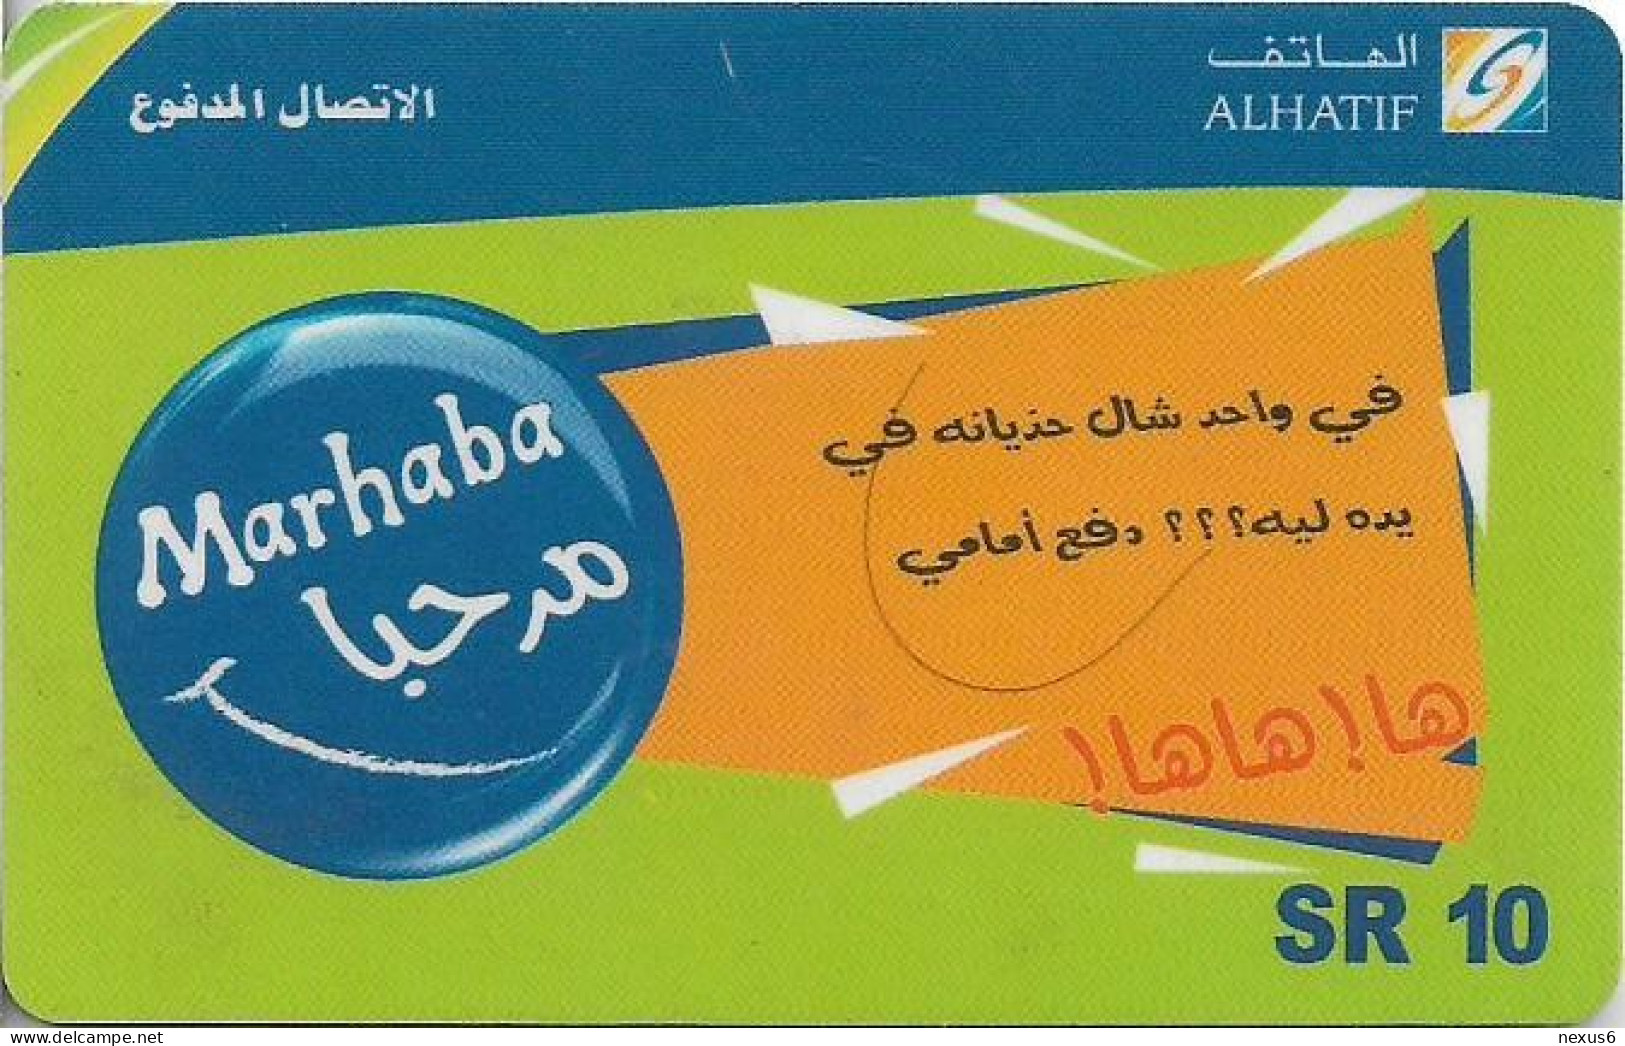 Saudi Arabia - S.T.C - Alhatif, Marhaba, 06.2003, Remote Mem. 10SR, Used - Saudi Arabia